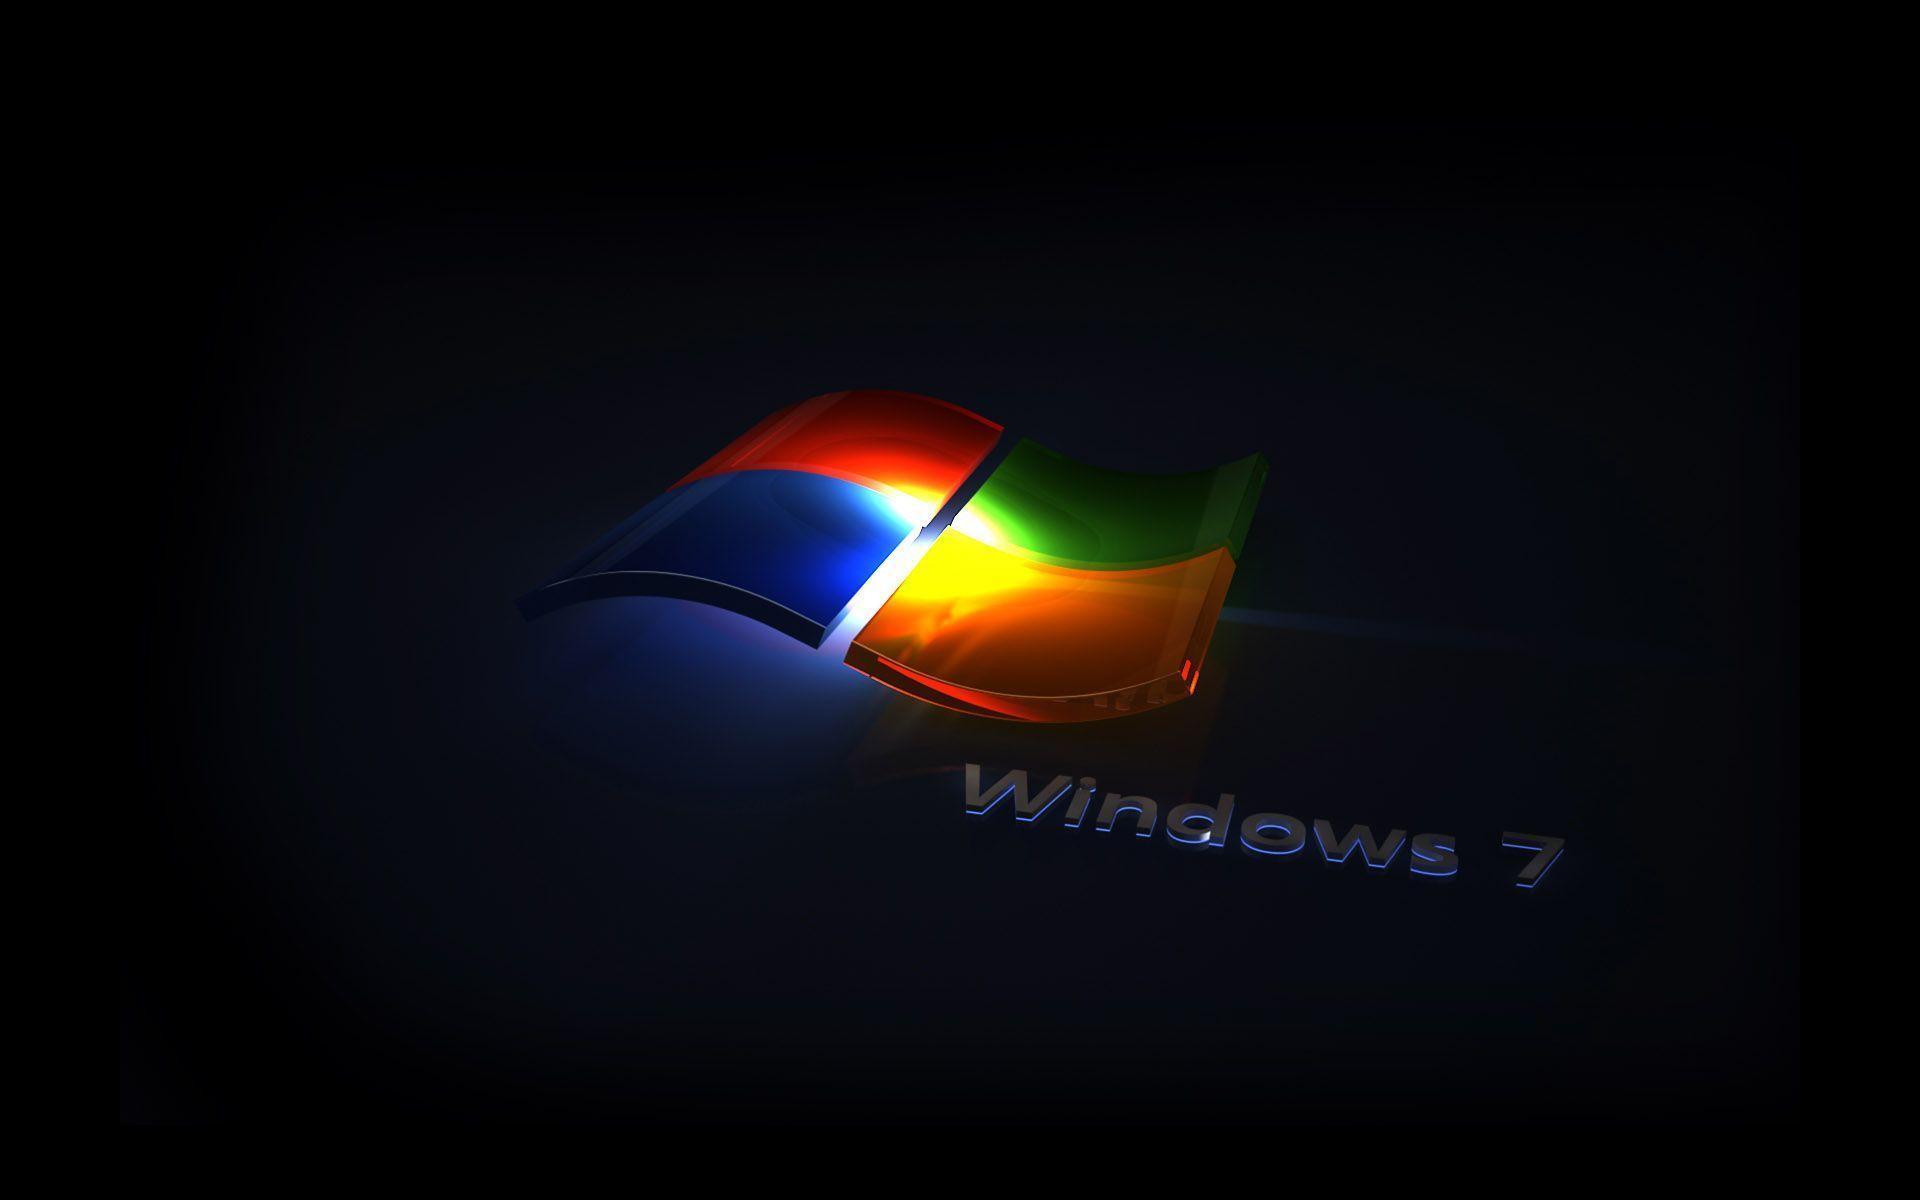 Wallpaper For > Windows 7 Ultimate Wallpaper 1600x900